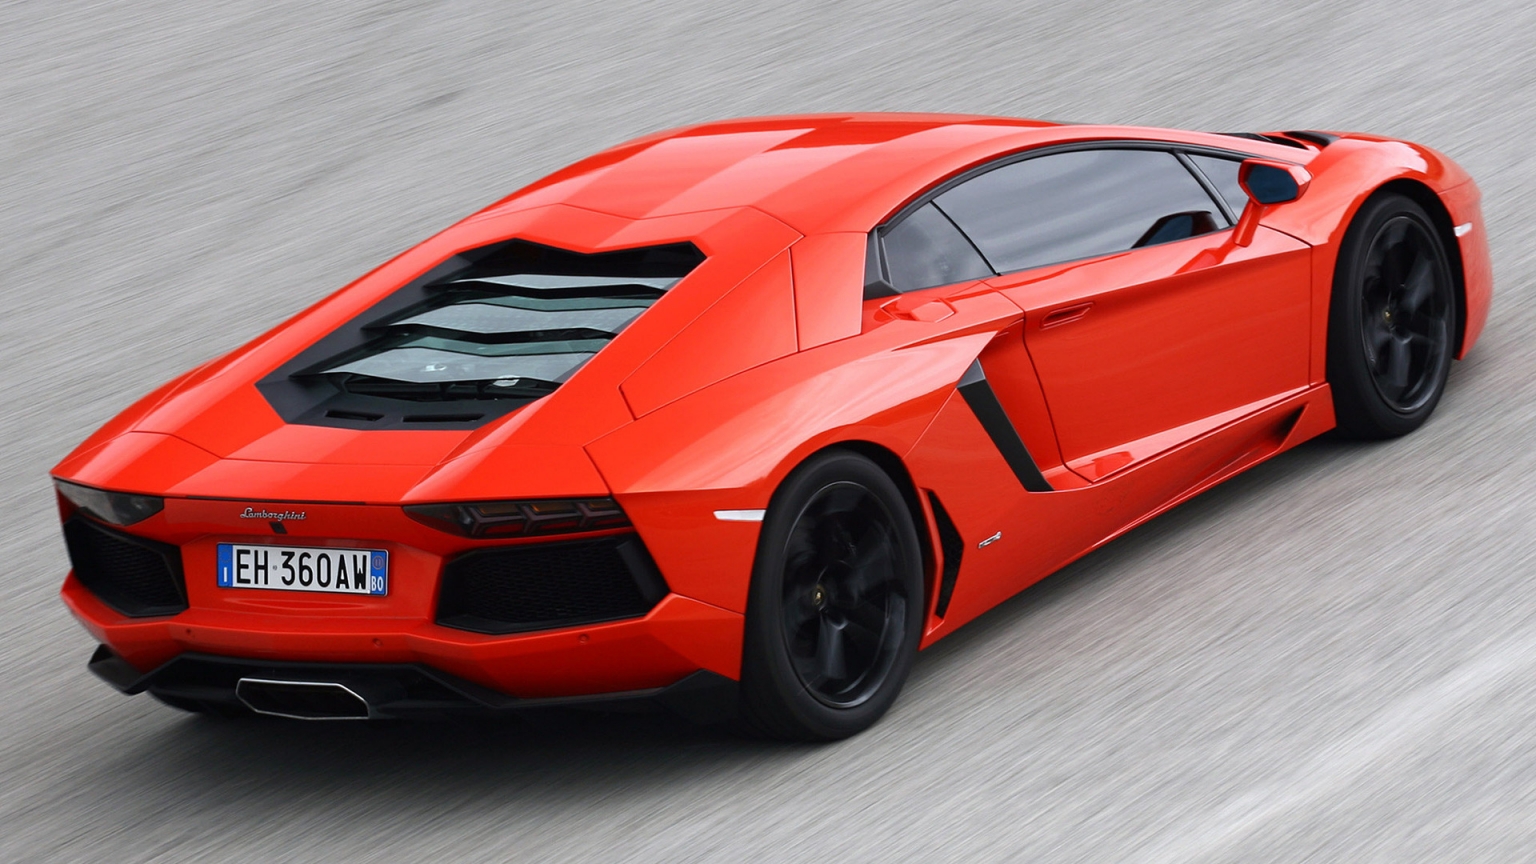 Lamborghini Aventador Top Rear for 1536 x 864 HDTV resolution